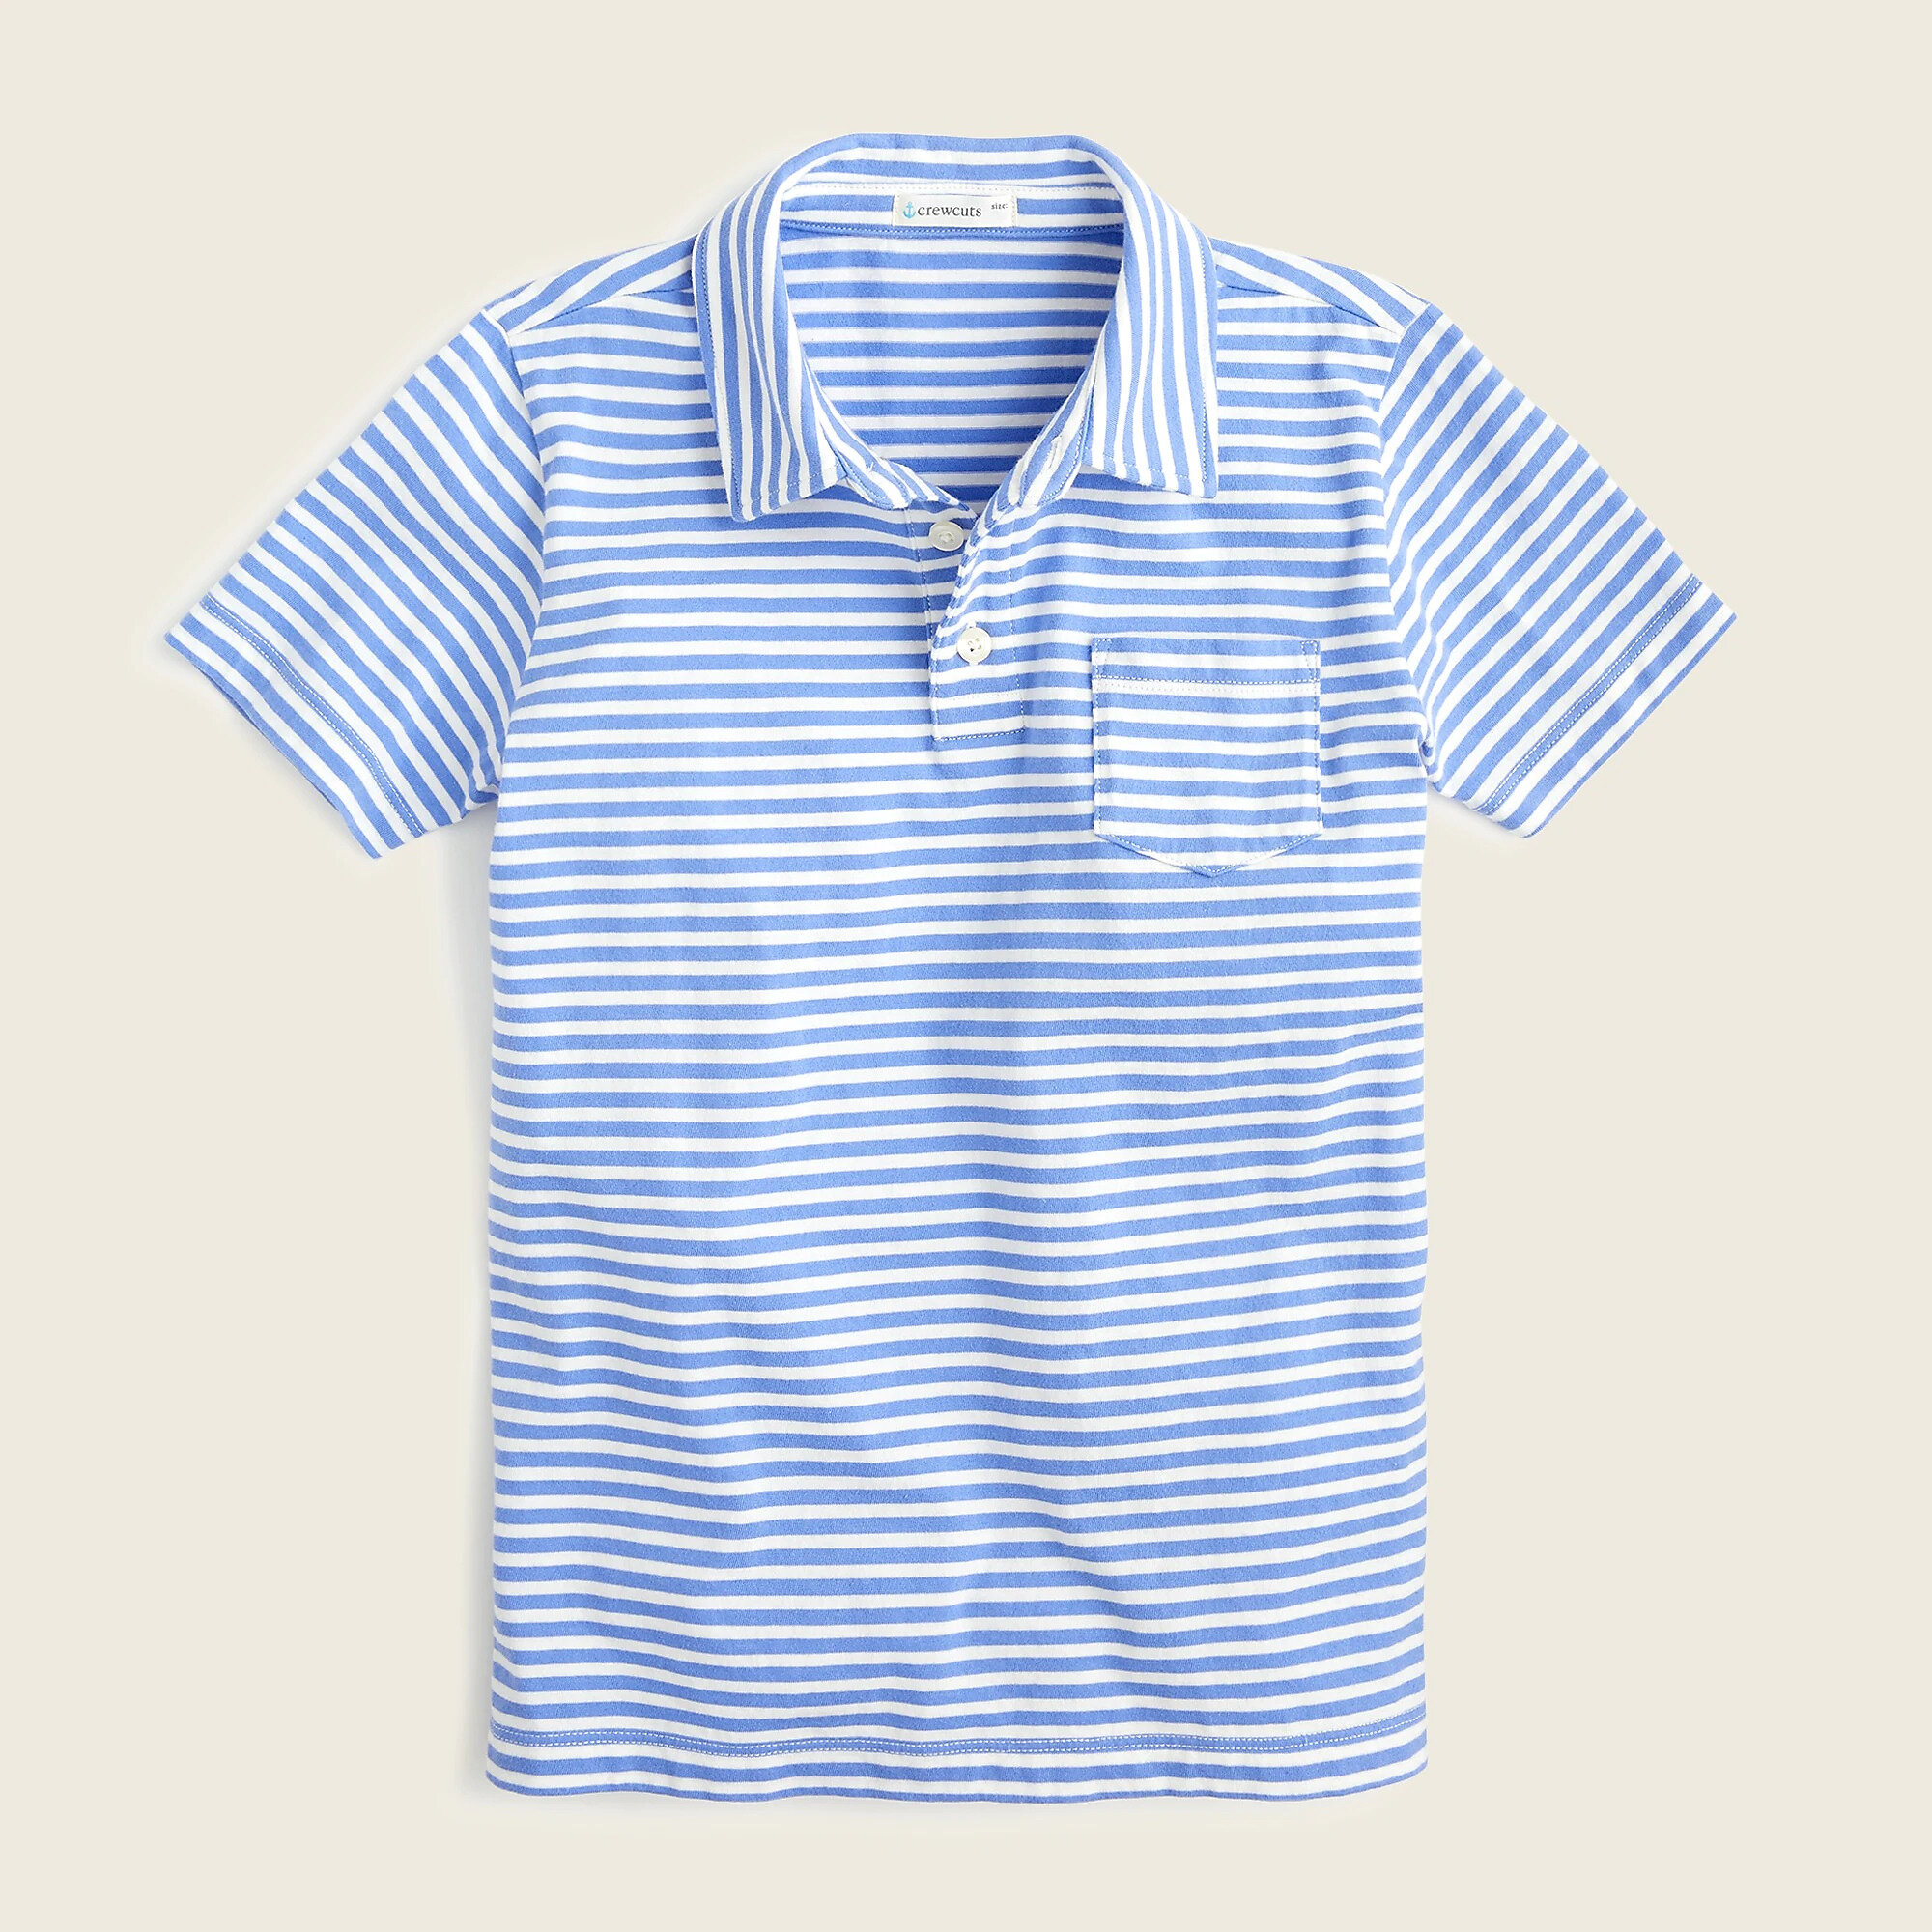 Boys' polo shirt in stripe - J Crew.jpg